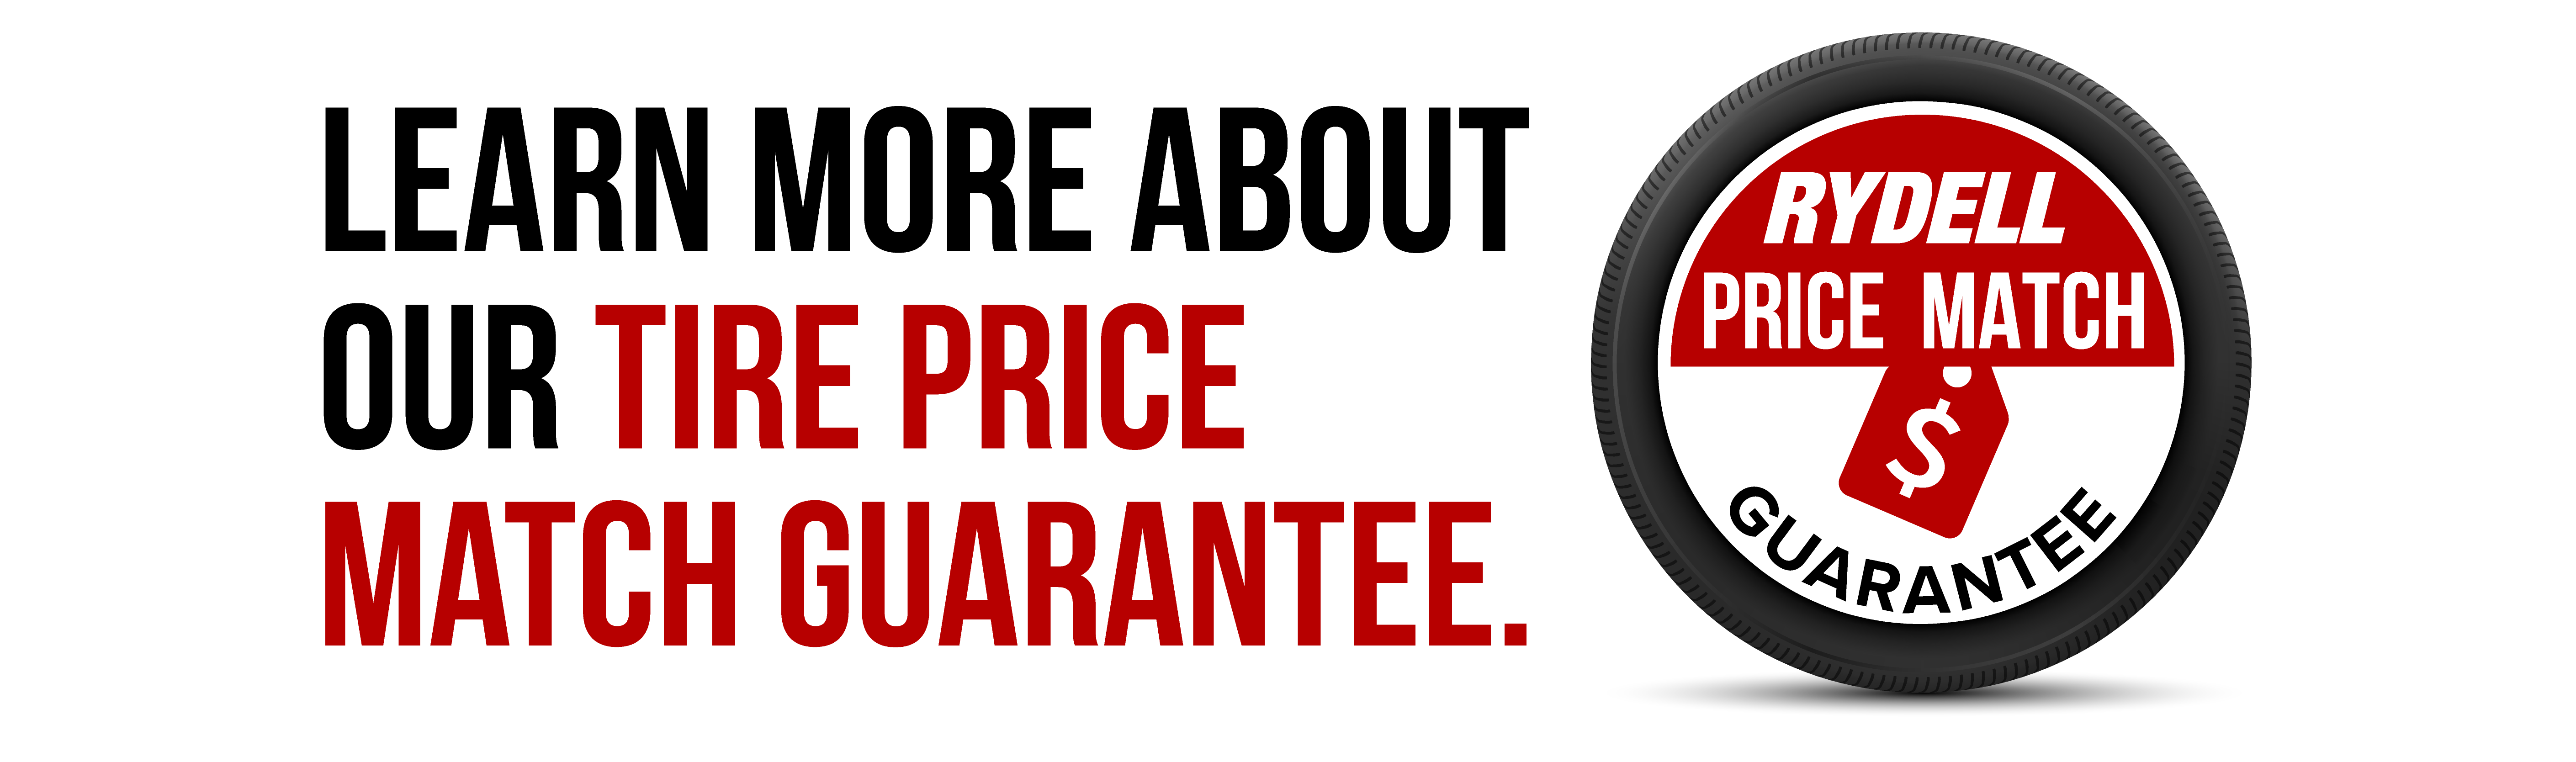 tire price match guarantee 